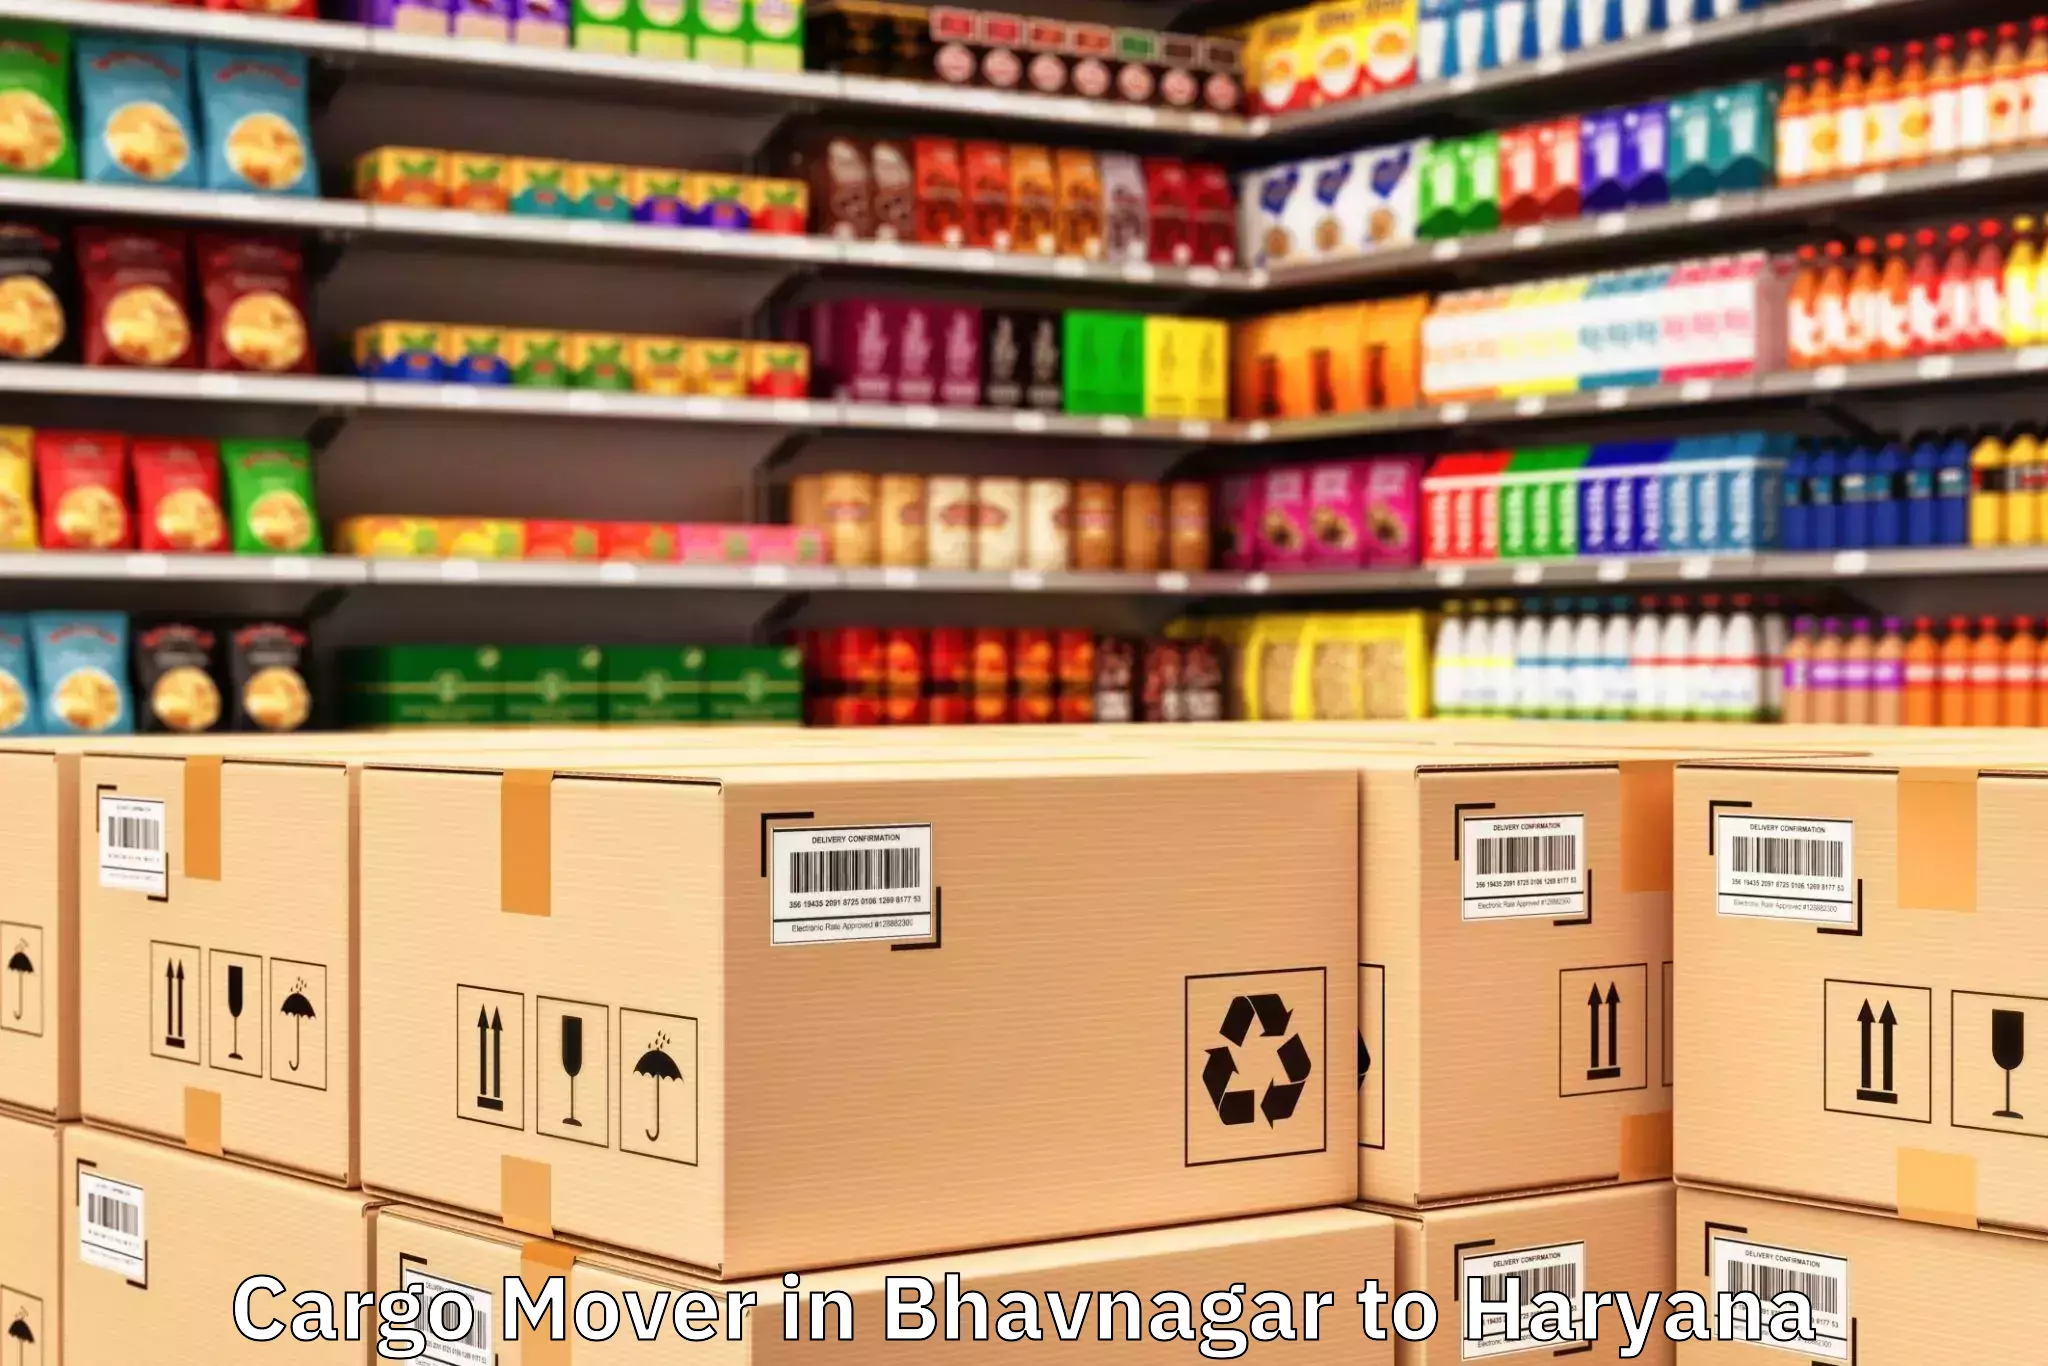 Bhavnagar to Murthal Cargo Mover Booking